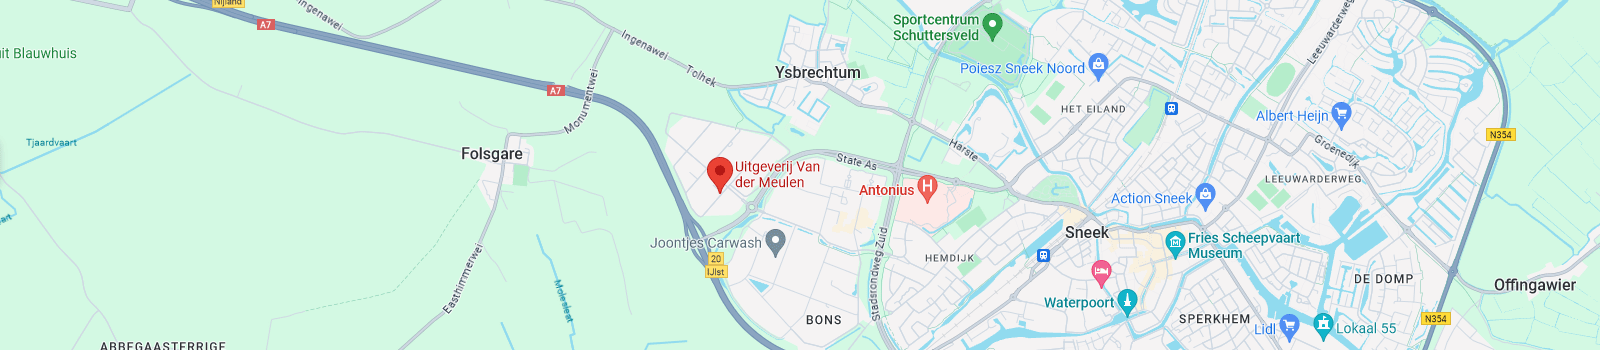 Van der Meulen Contact Google Maps